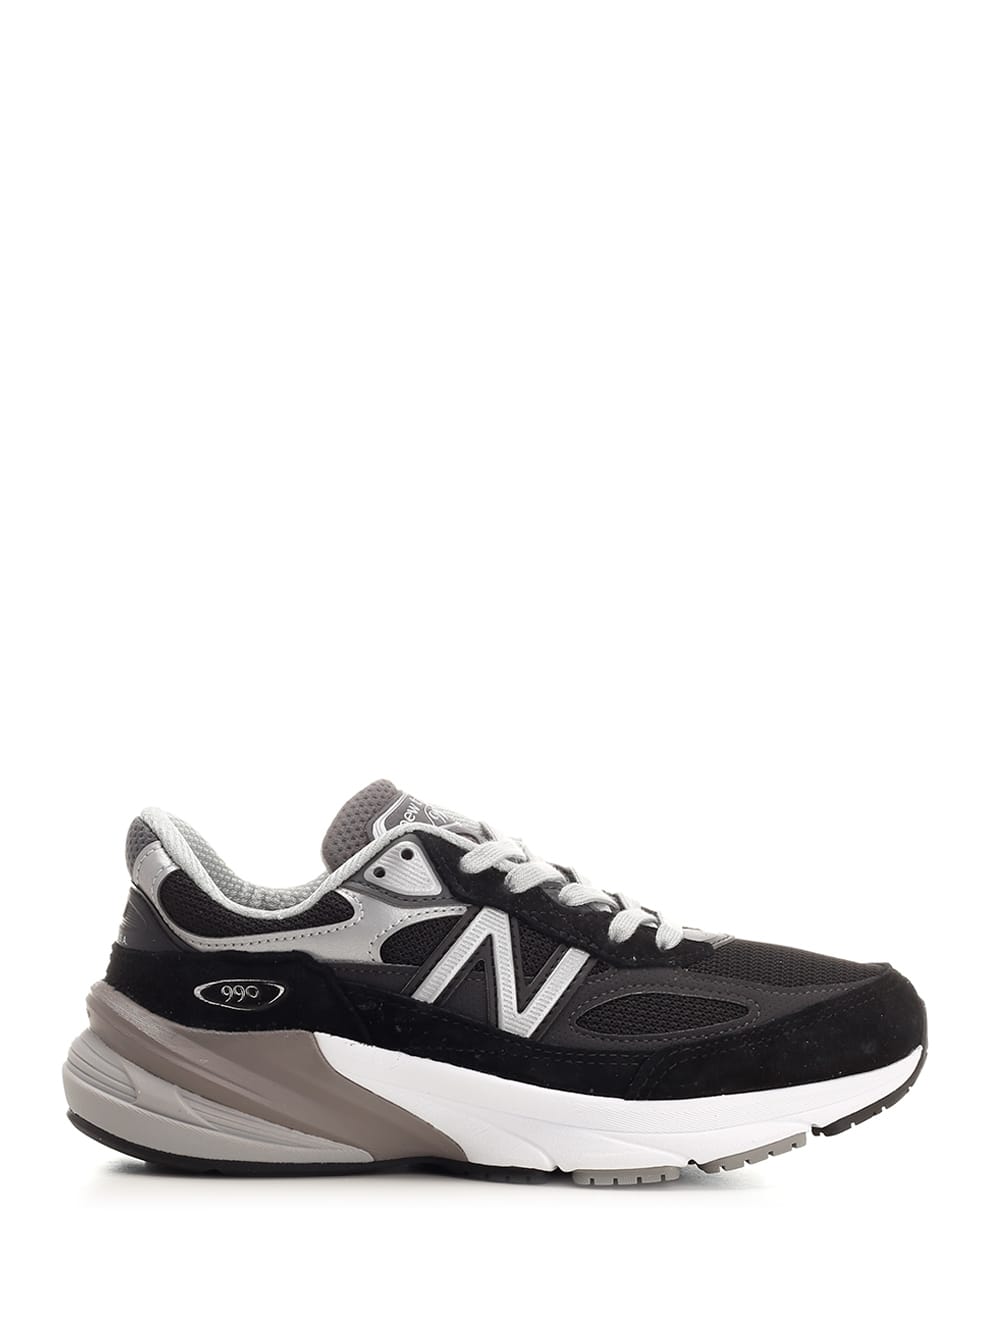 Shop New Balance Black 990 Sneakers